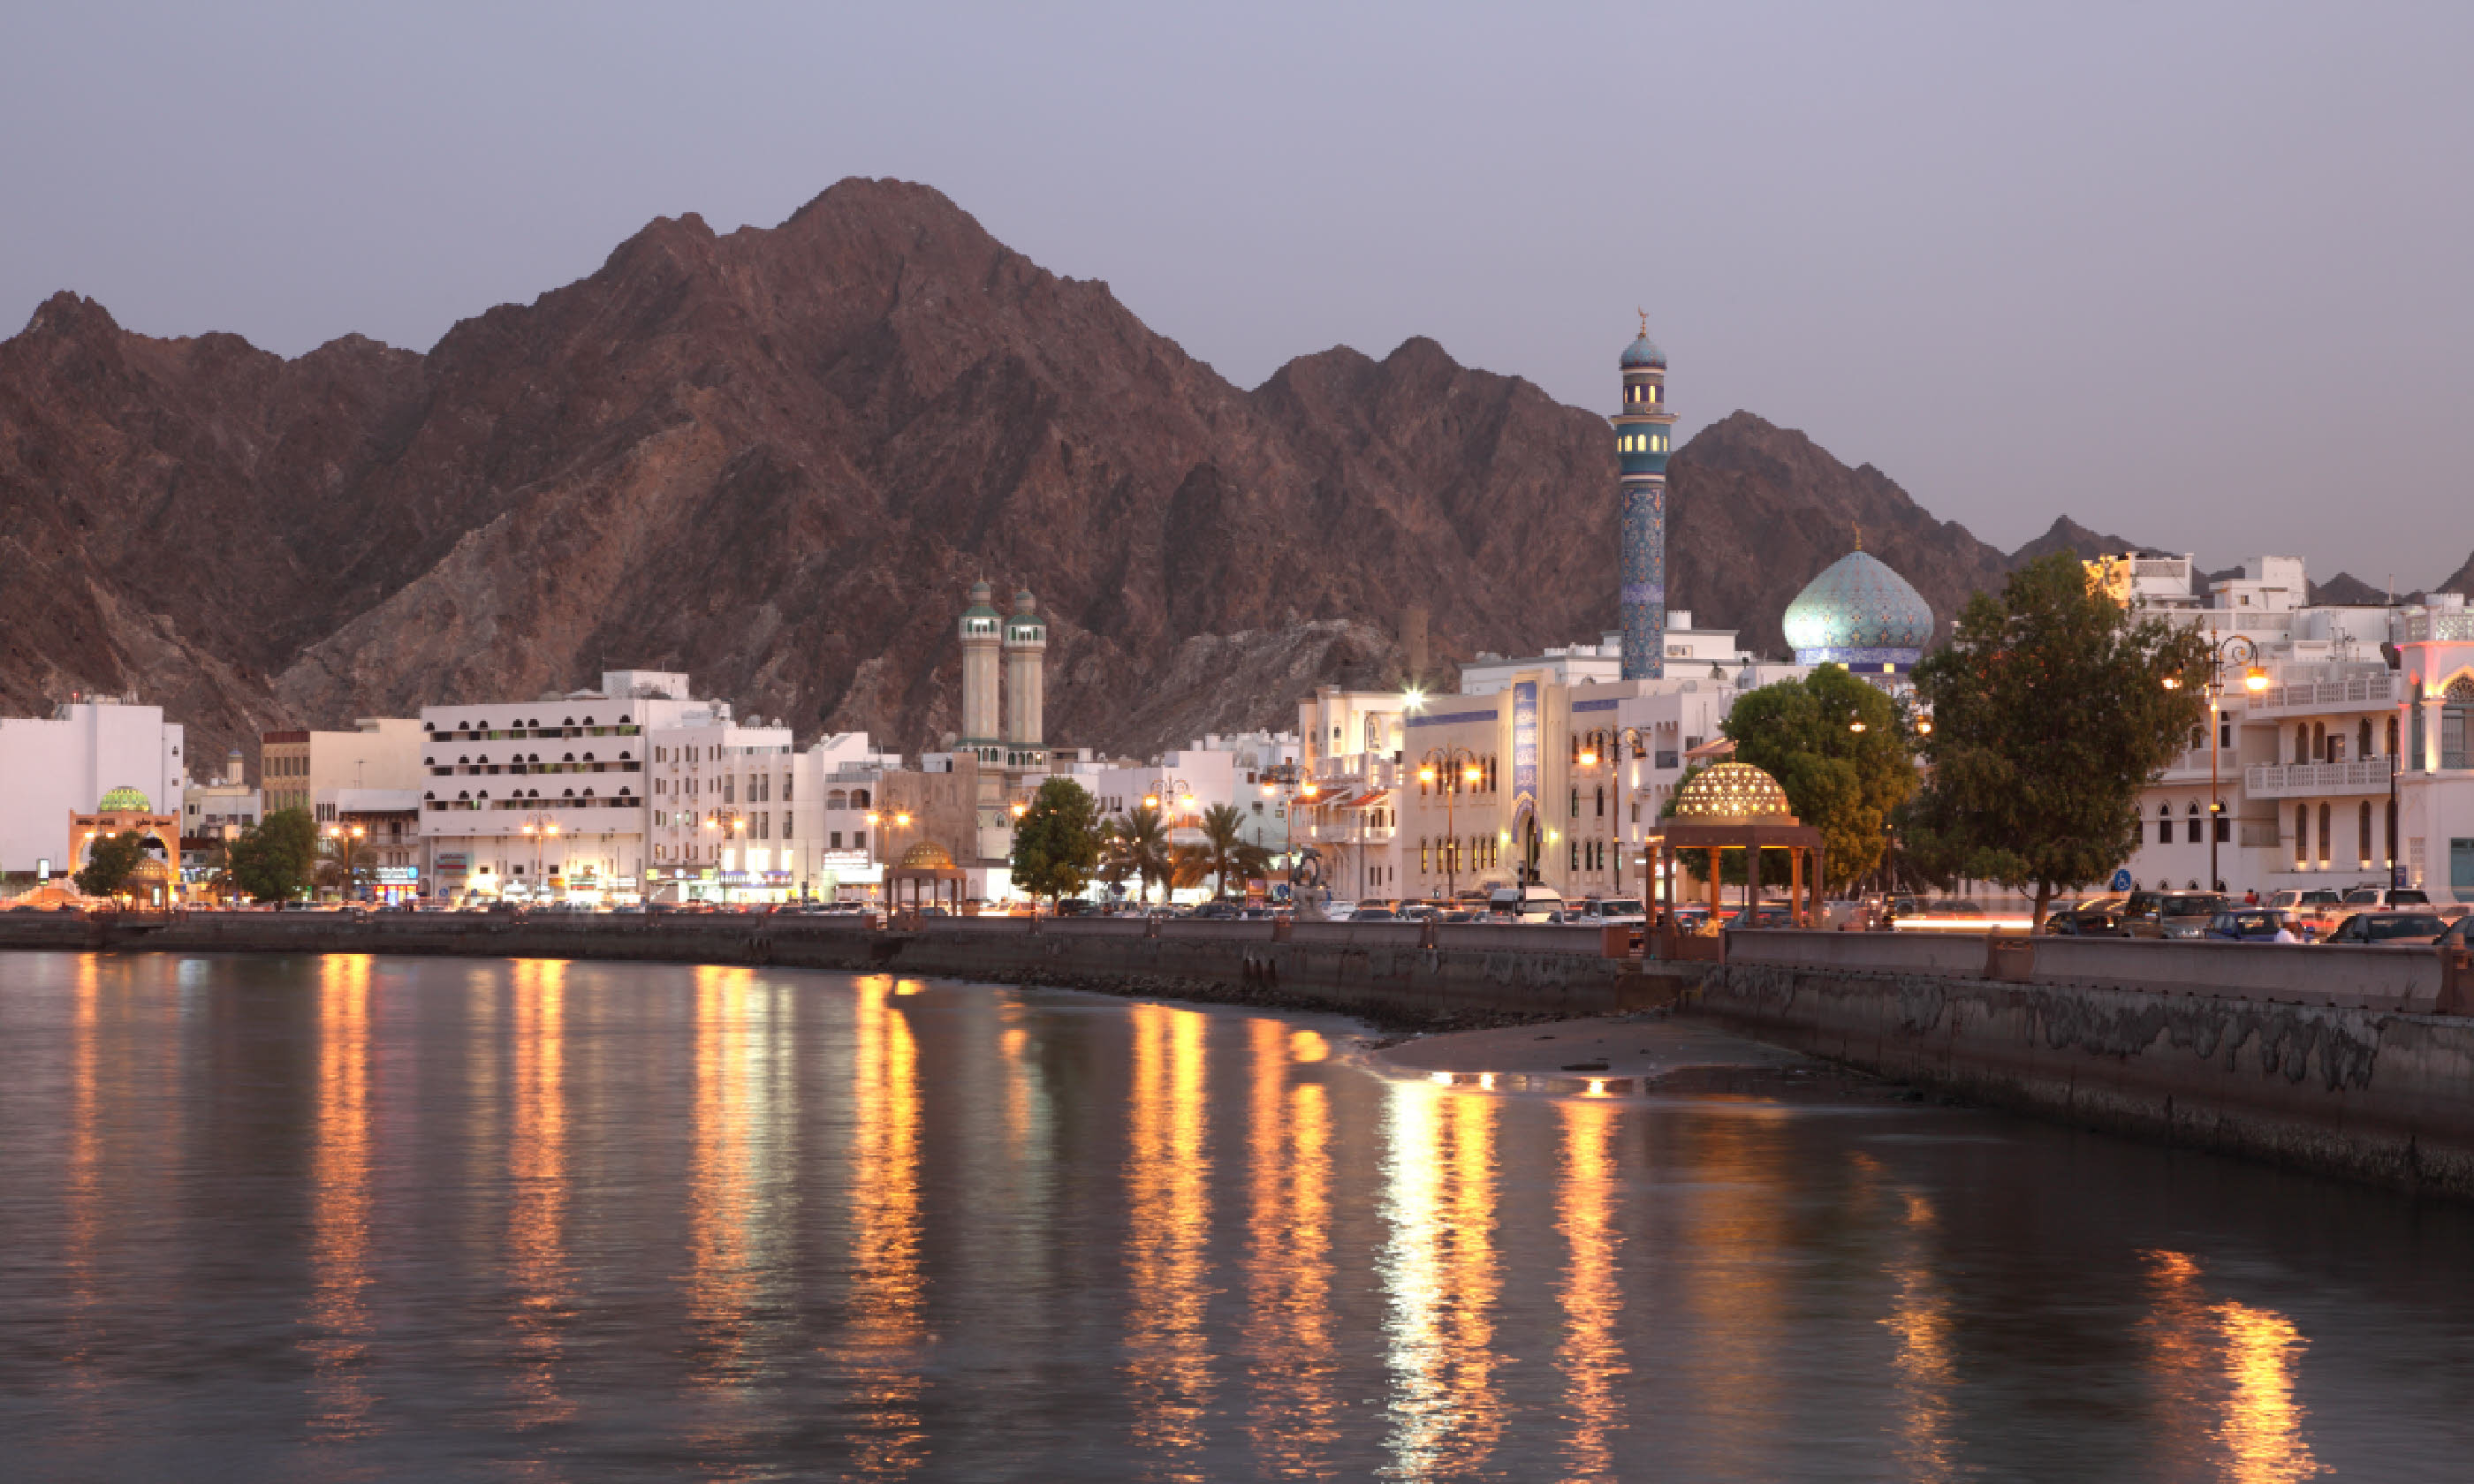 Main image: Muttrah Corniche at dusk (Shutterstock: see credit below)